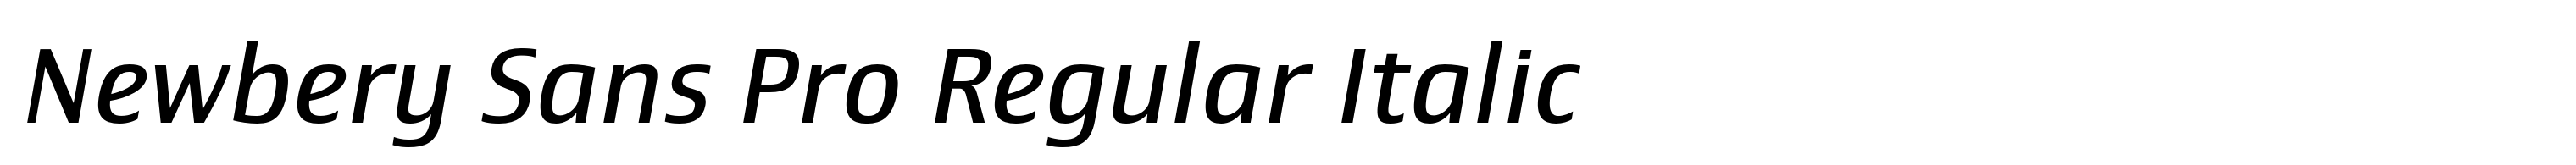 Newbery Sans Pro Regular Italic